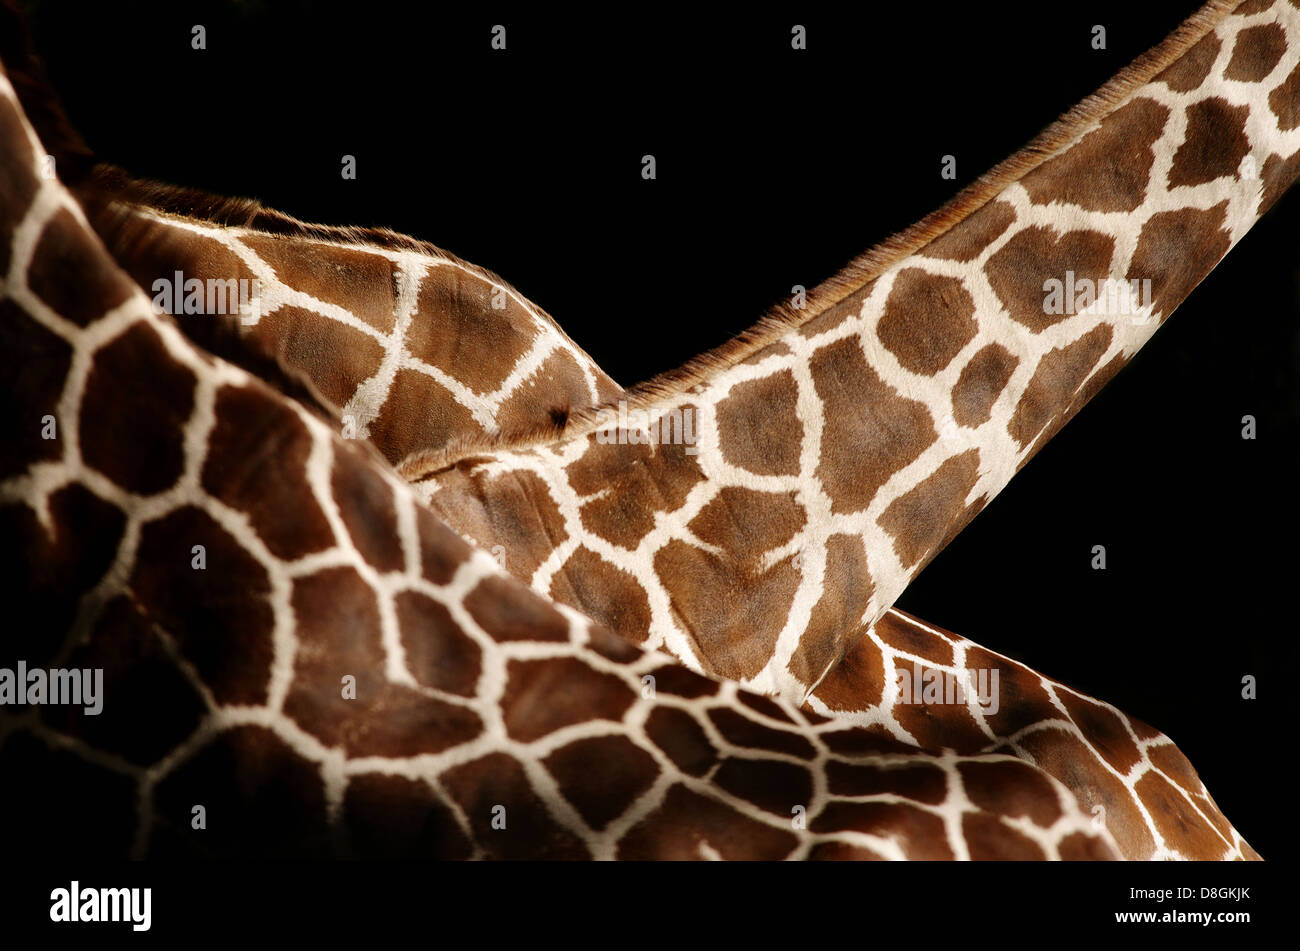 3 Girafes somaliens Banque D'Images